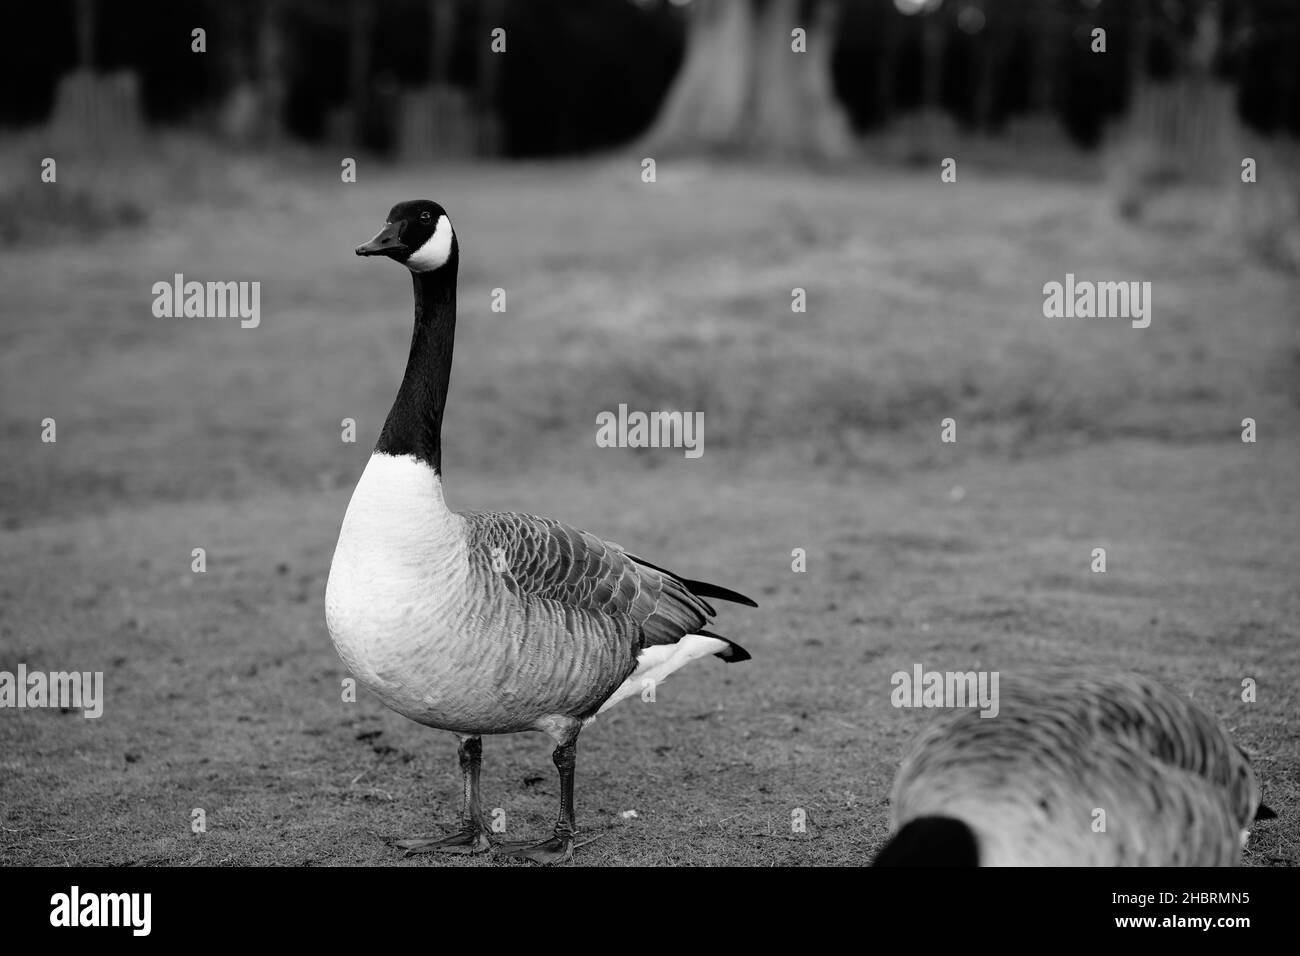 canada goose monochrome image Stock Photo